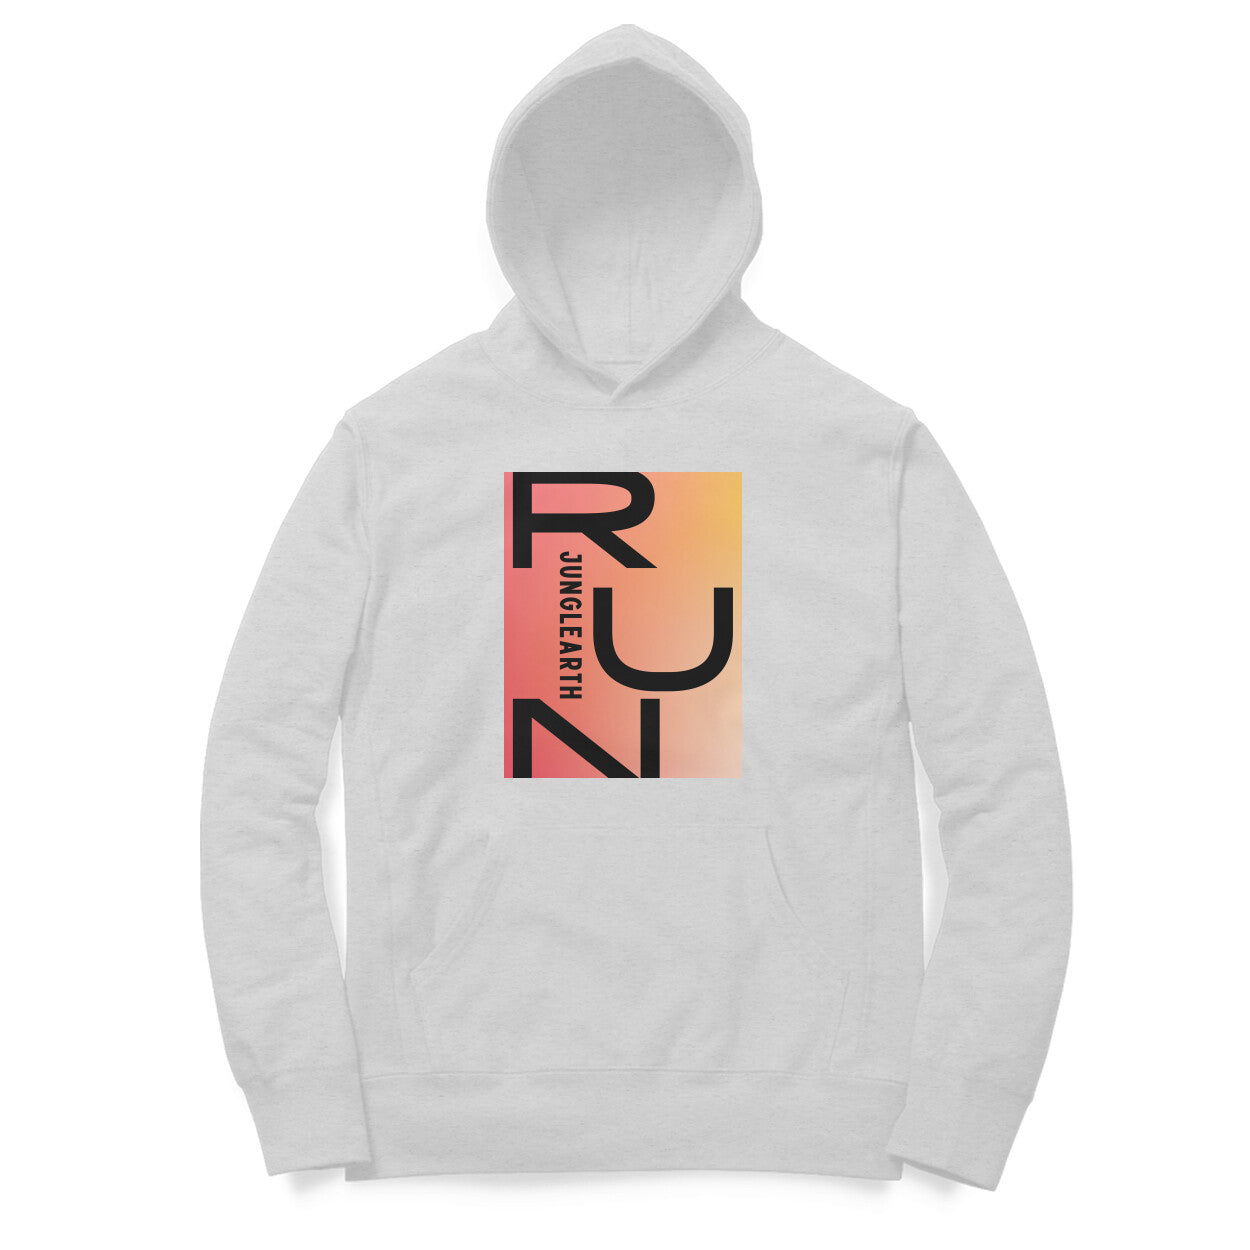 Run for freedom junglearth hoodie